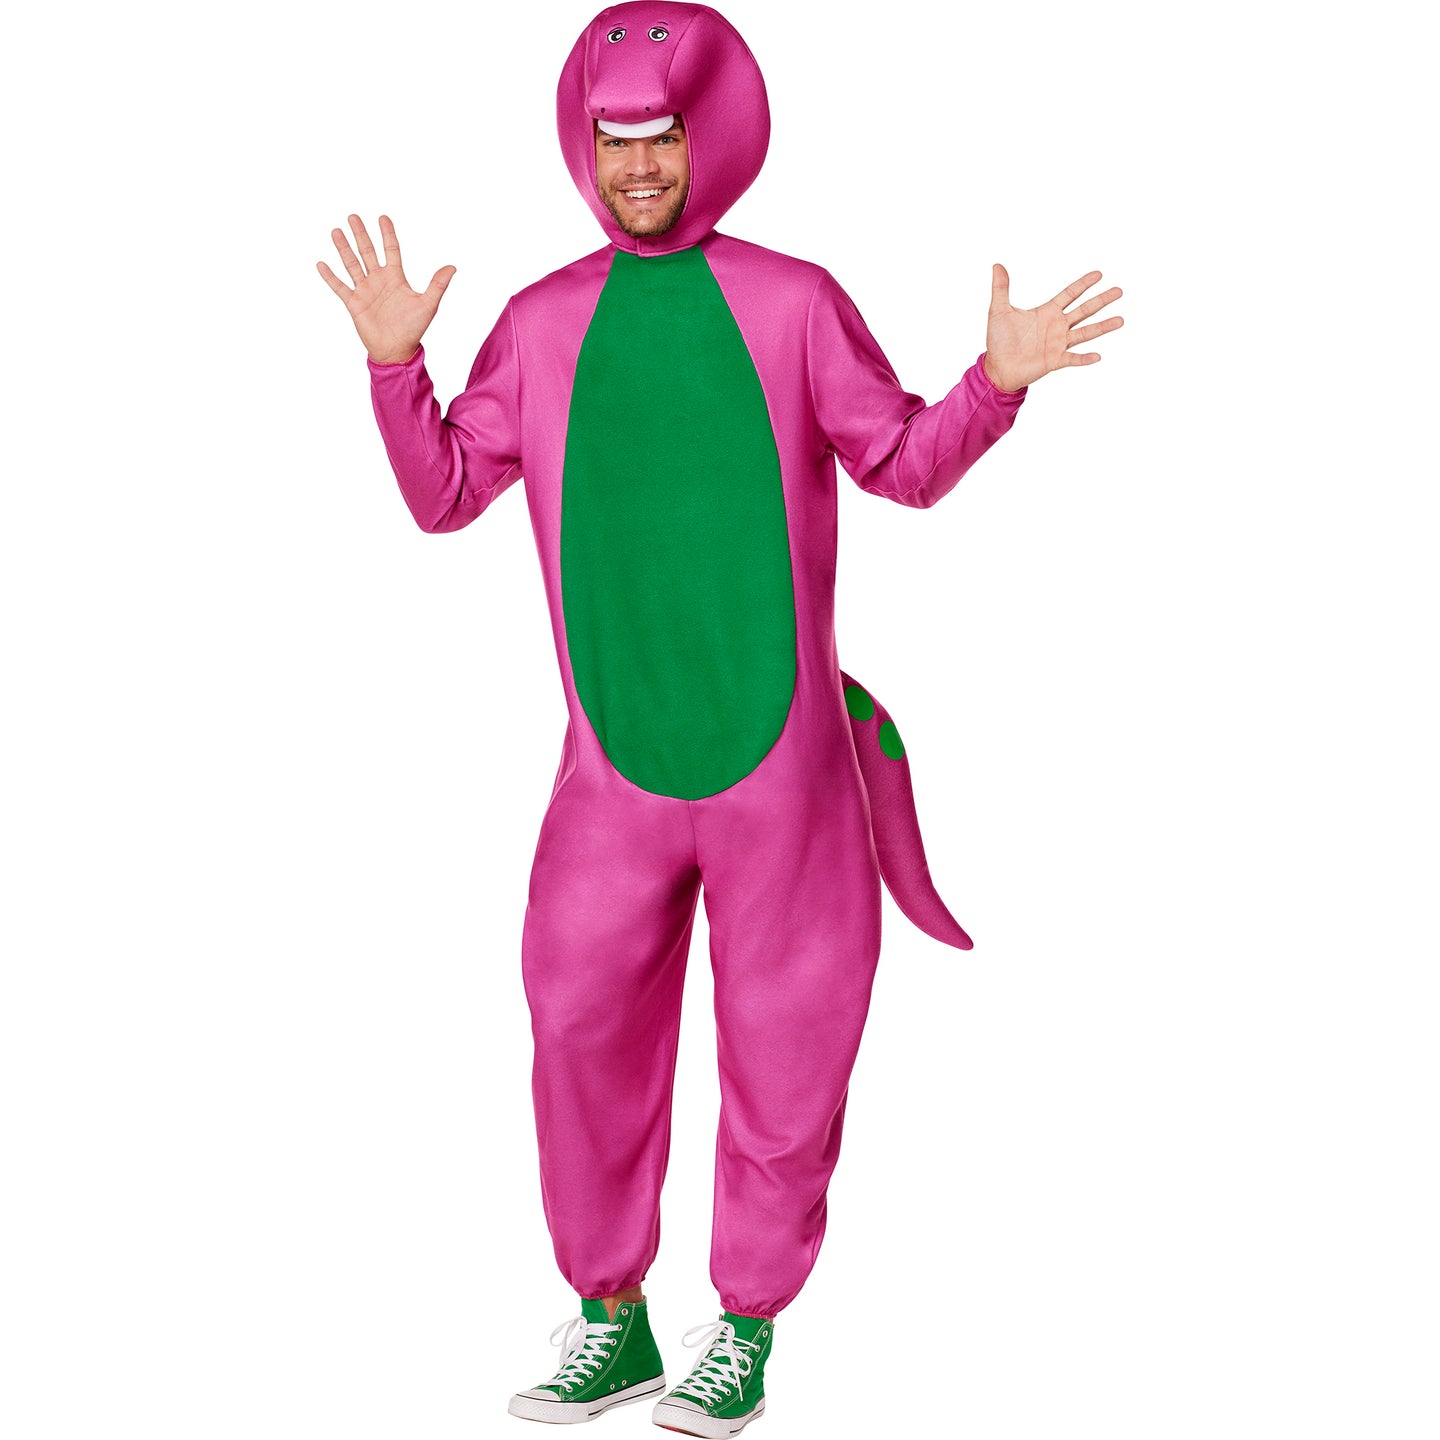 InSpirit Designs Adult Barney Costume